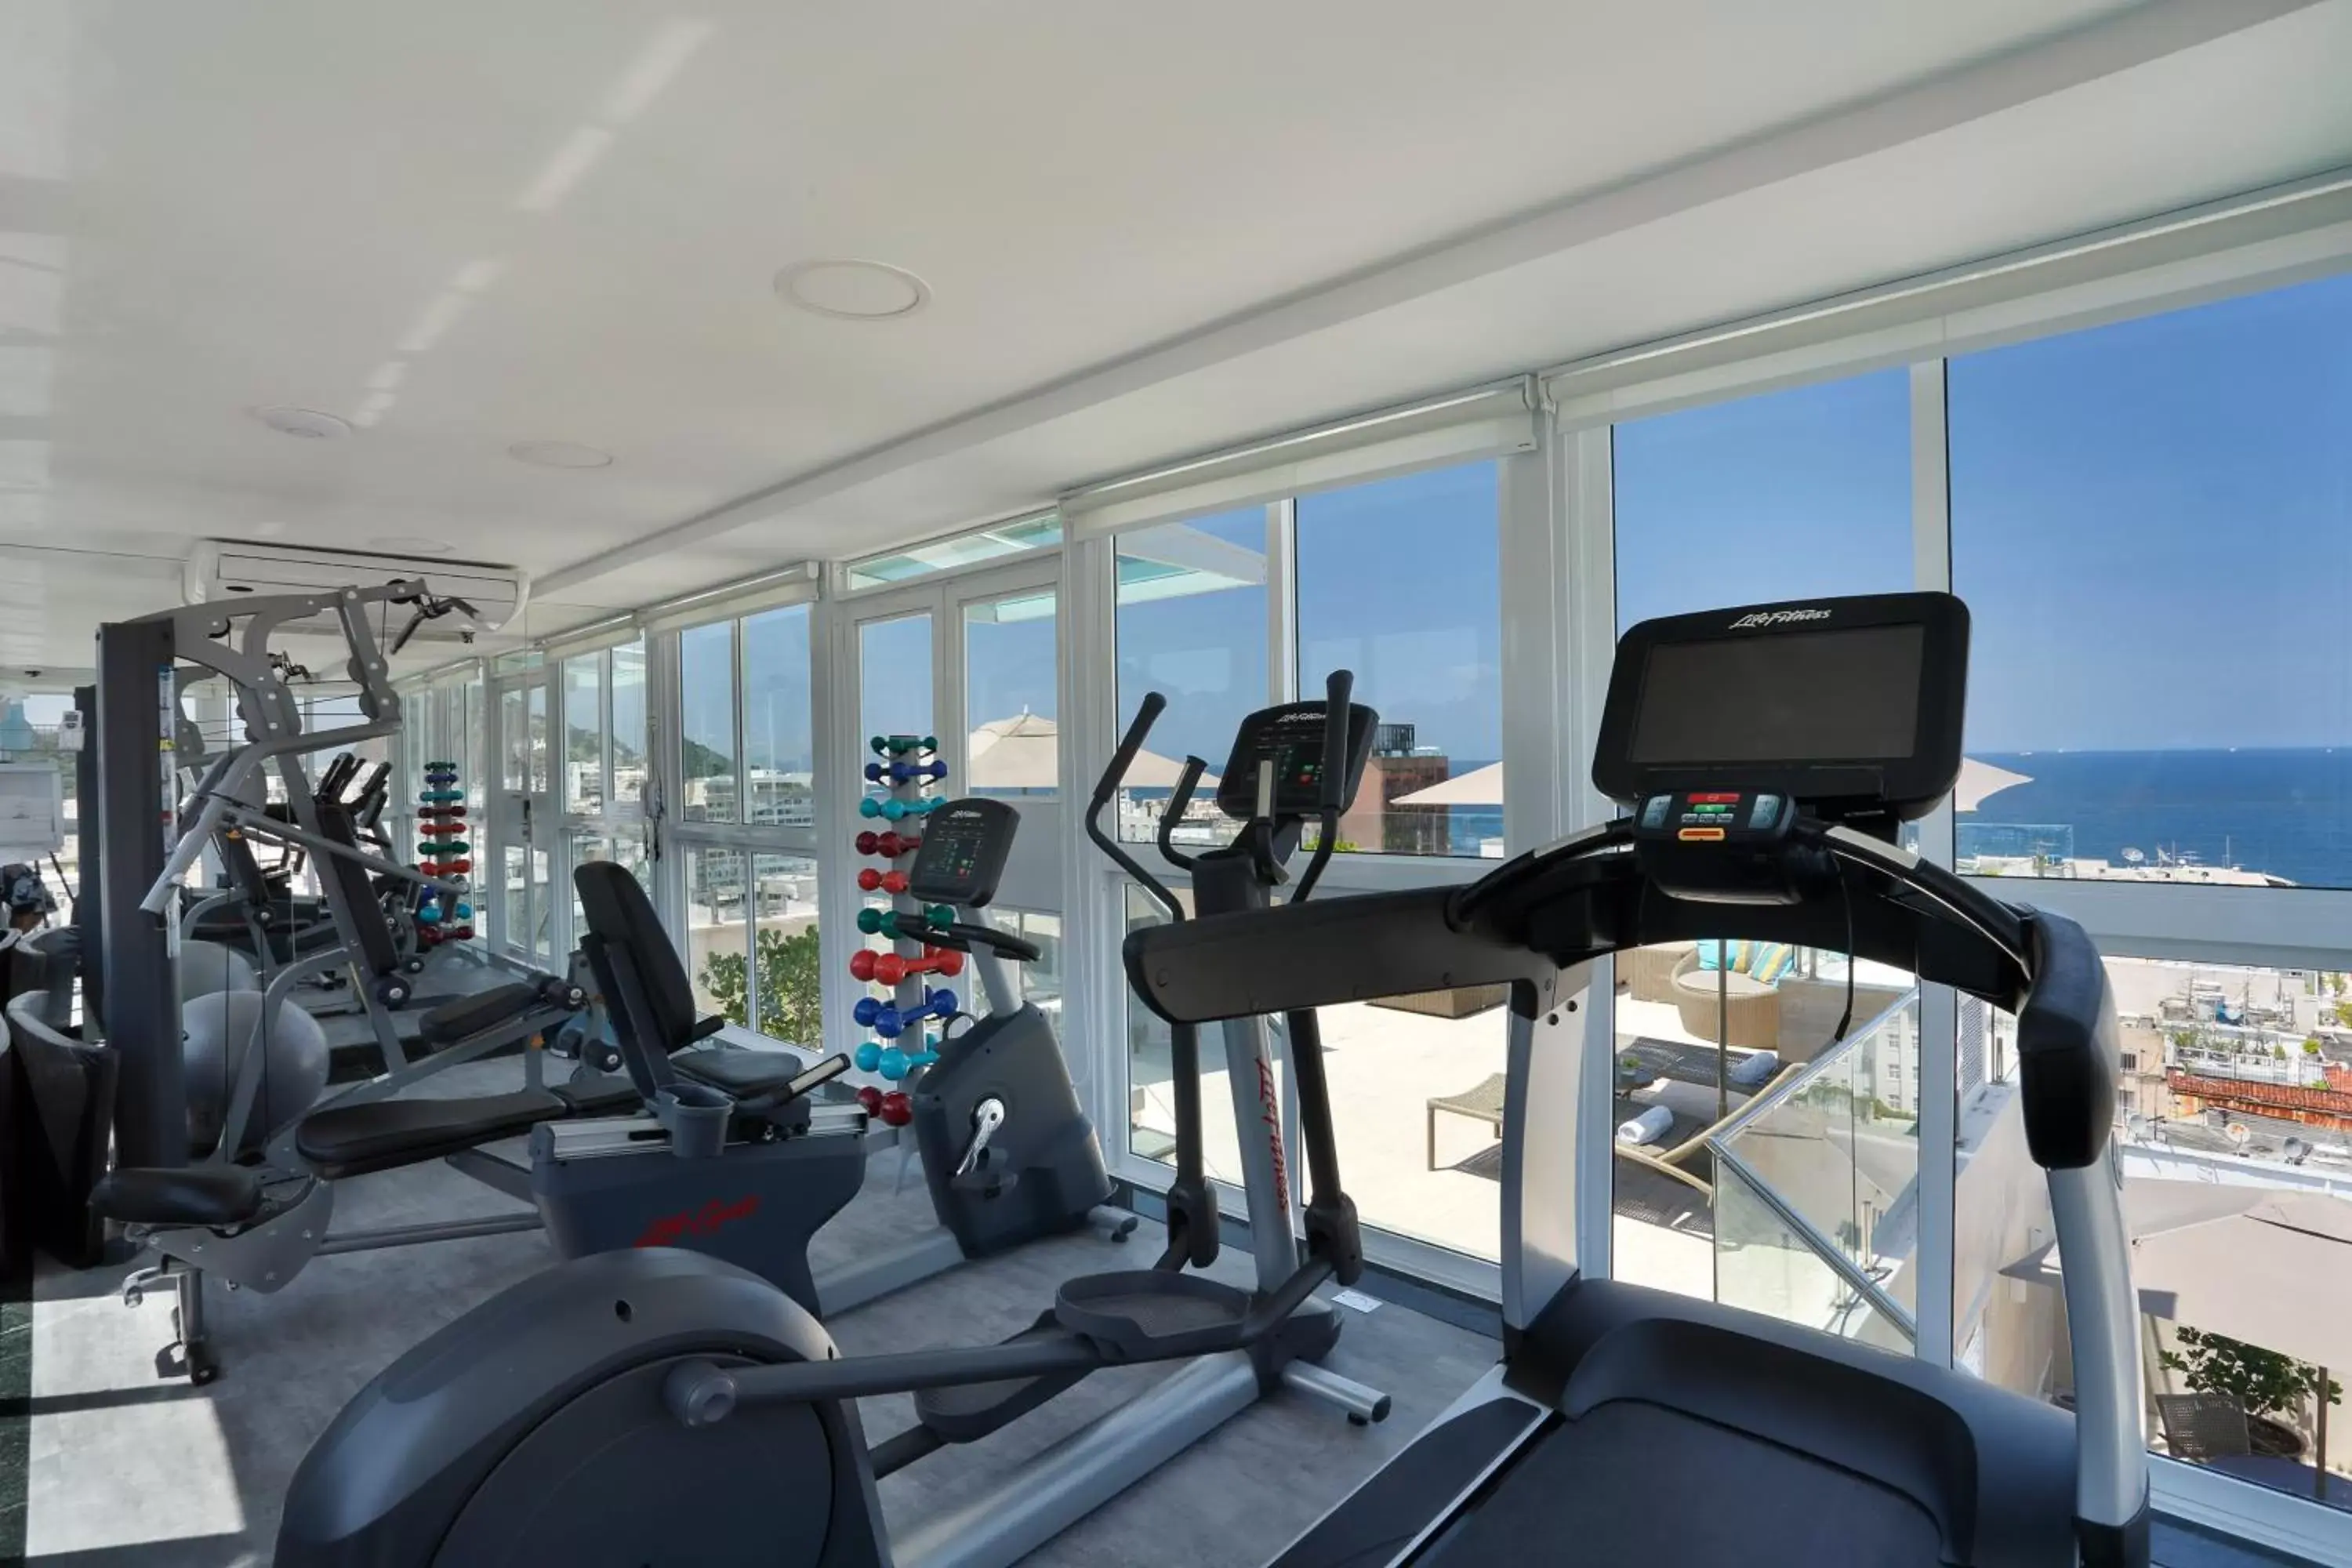 Fitness centre/facilities, Fitness Center/Facilities in Mirasol Copacabana Hotel